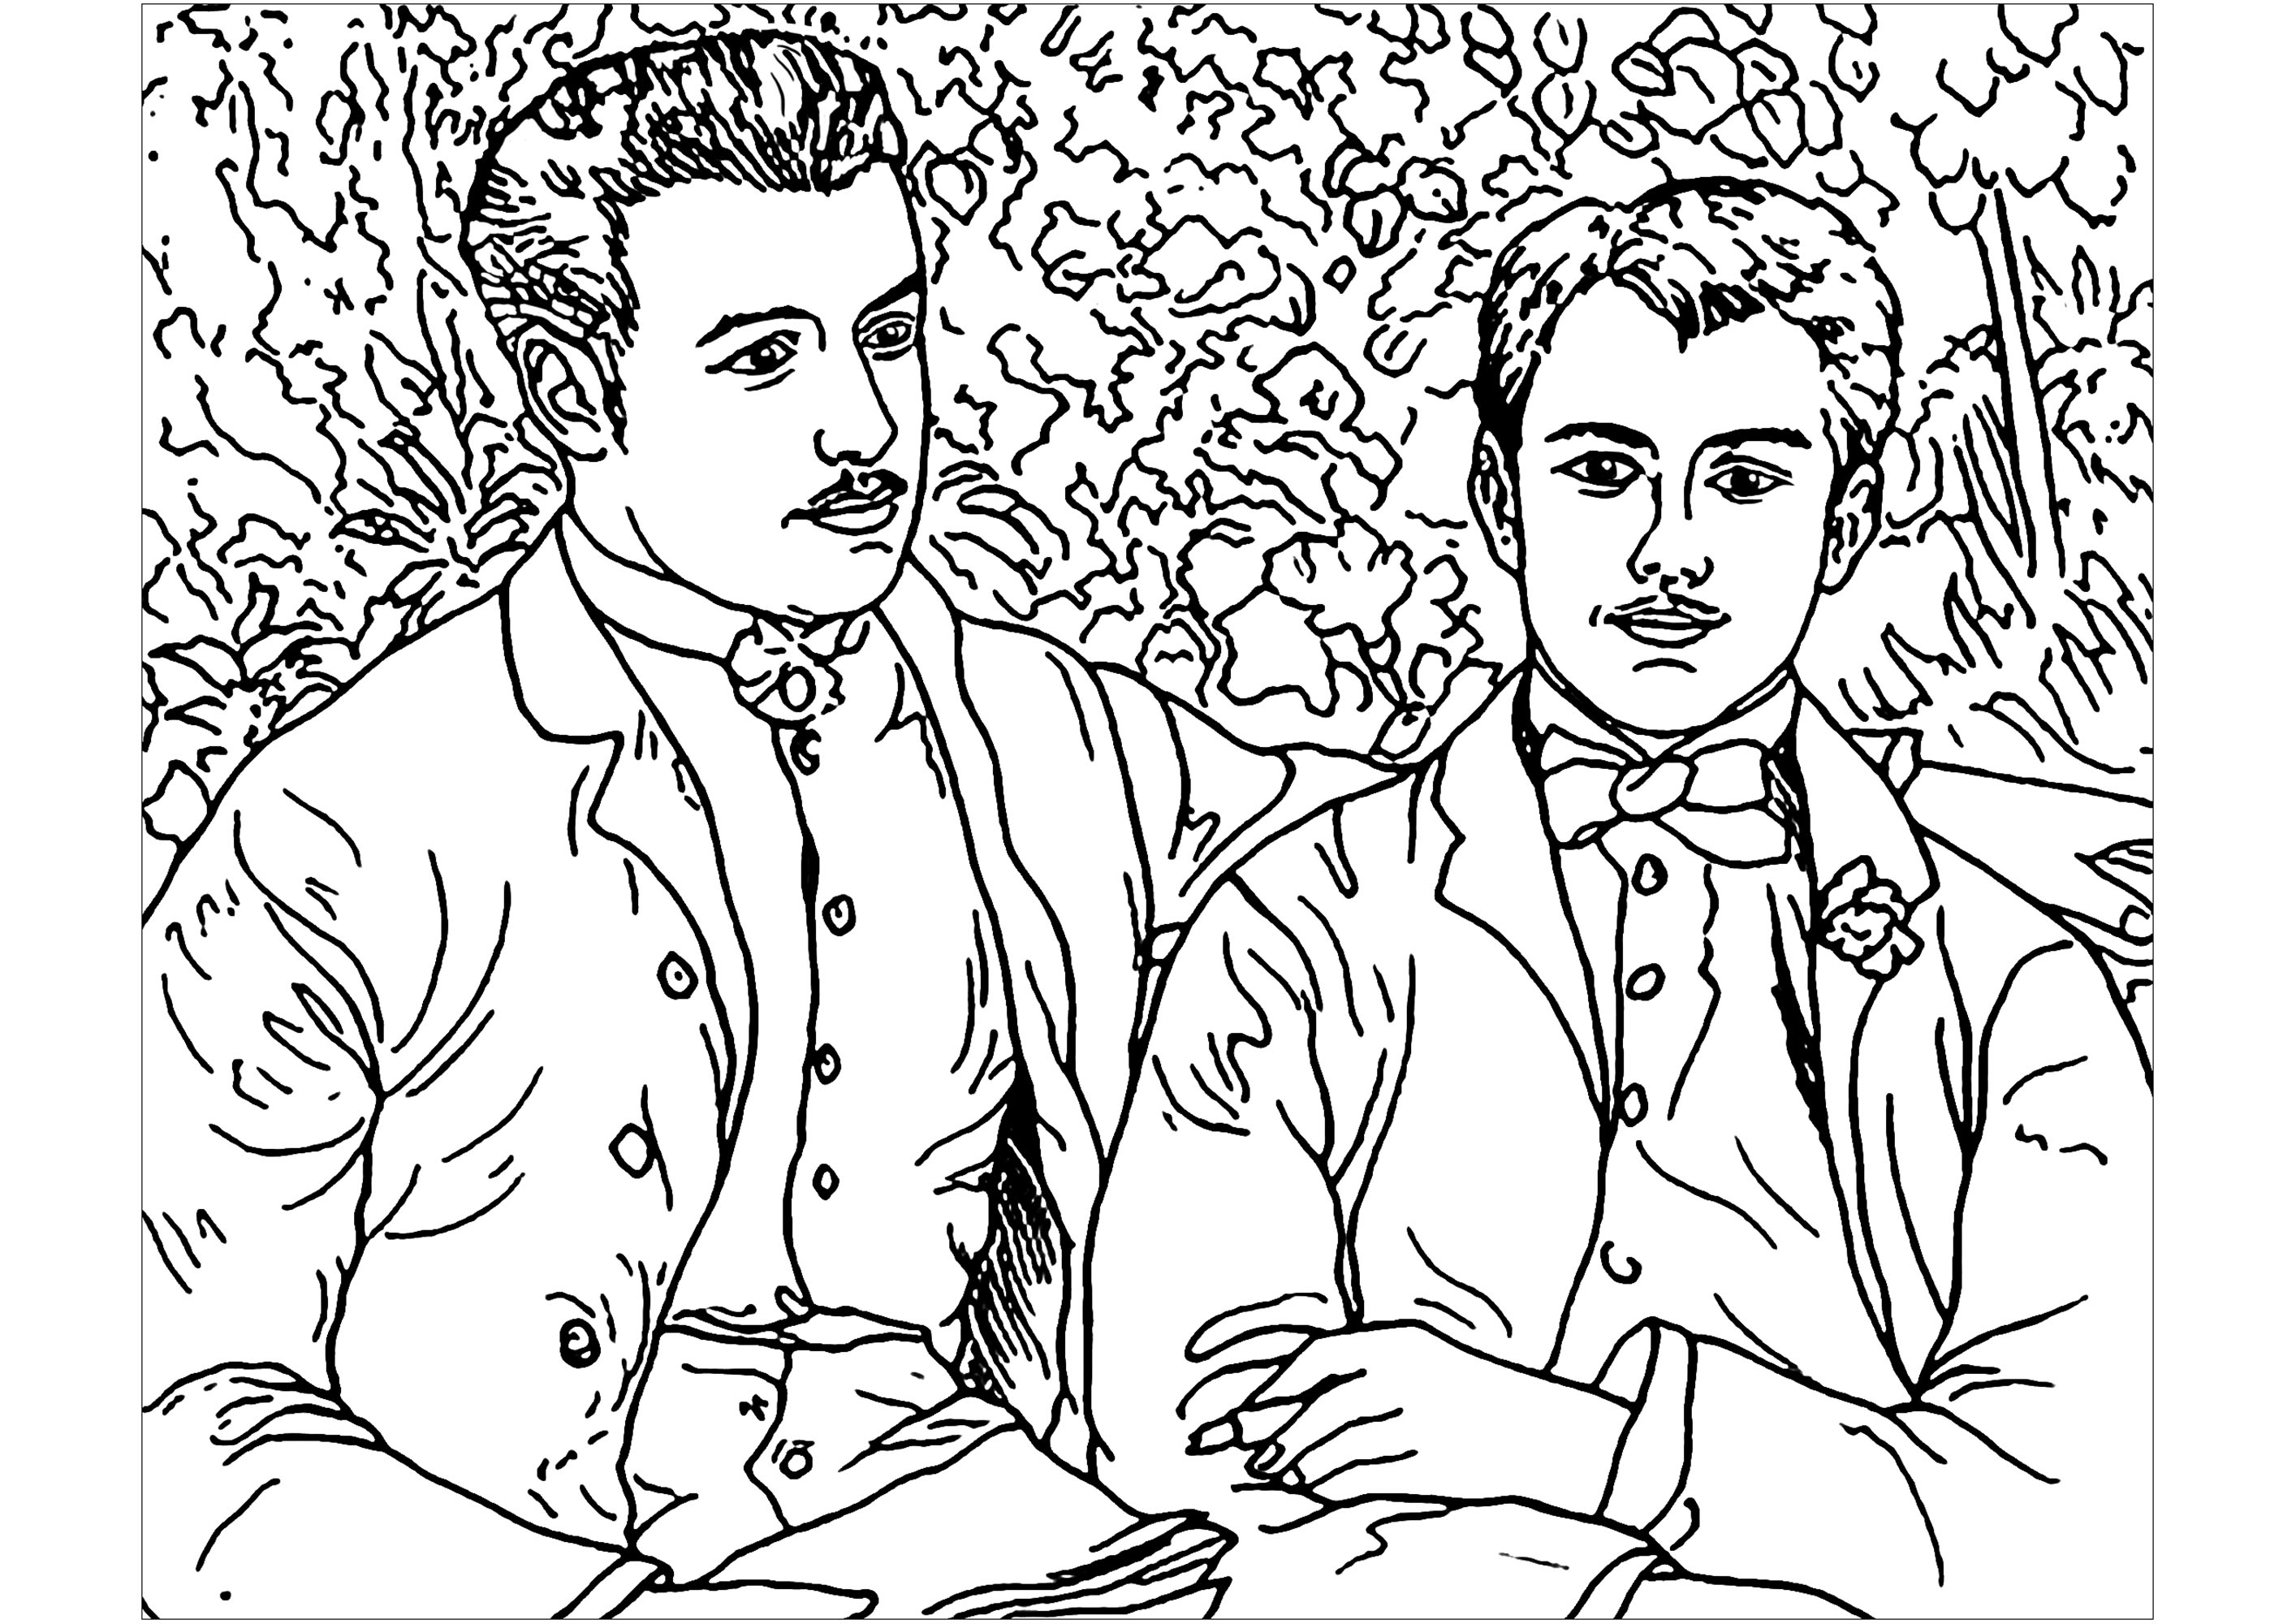 Página para colorir inspirada num quadro do artista impressionista Pierre-Auguste Renoir : Retrato de Charles e Georges Durand Ruel, Artista : Art'Isabelle